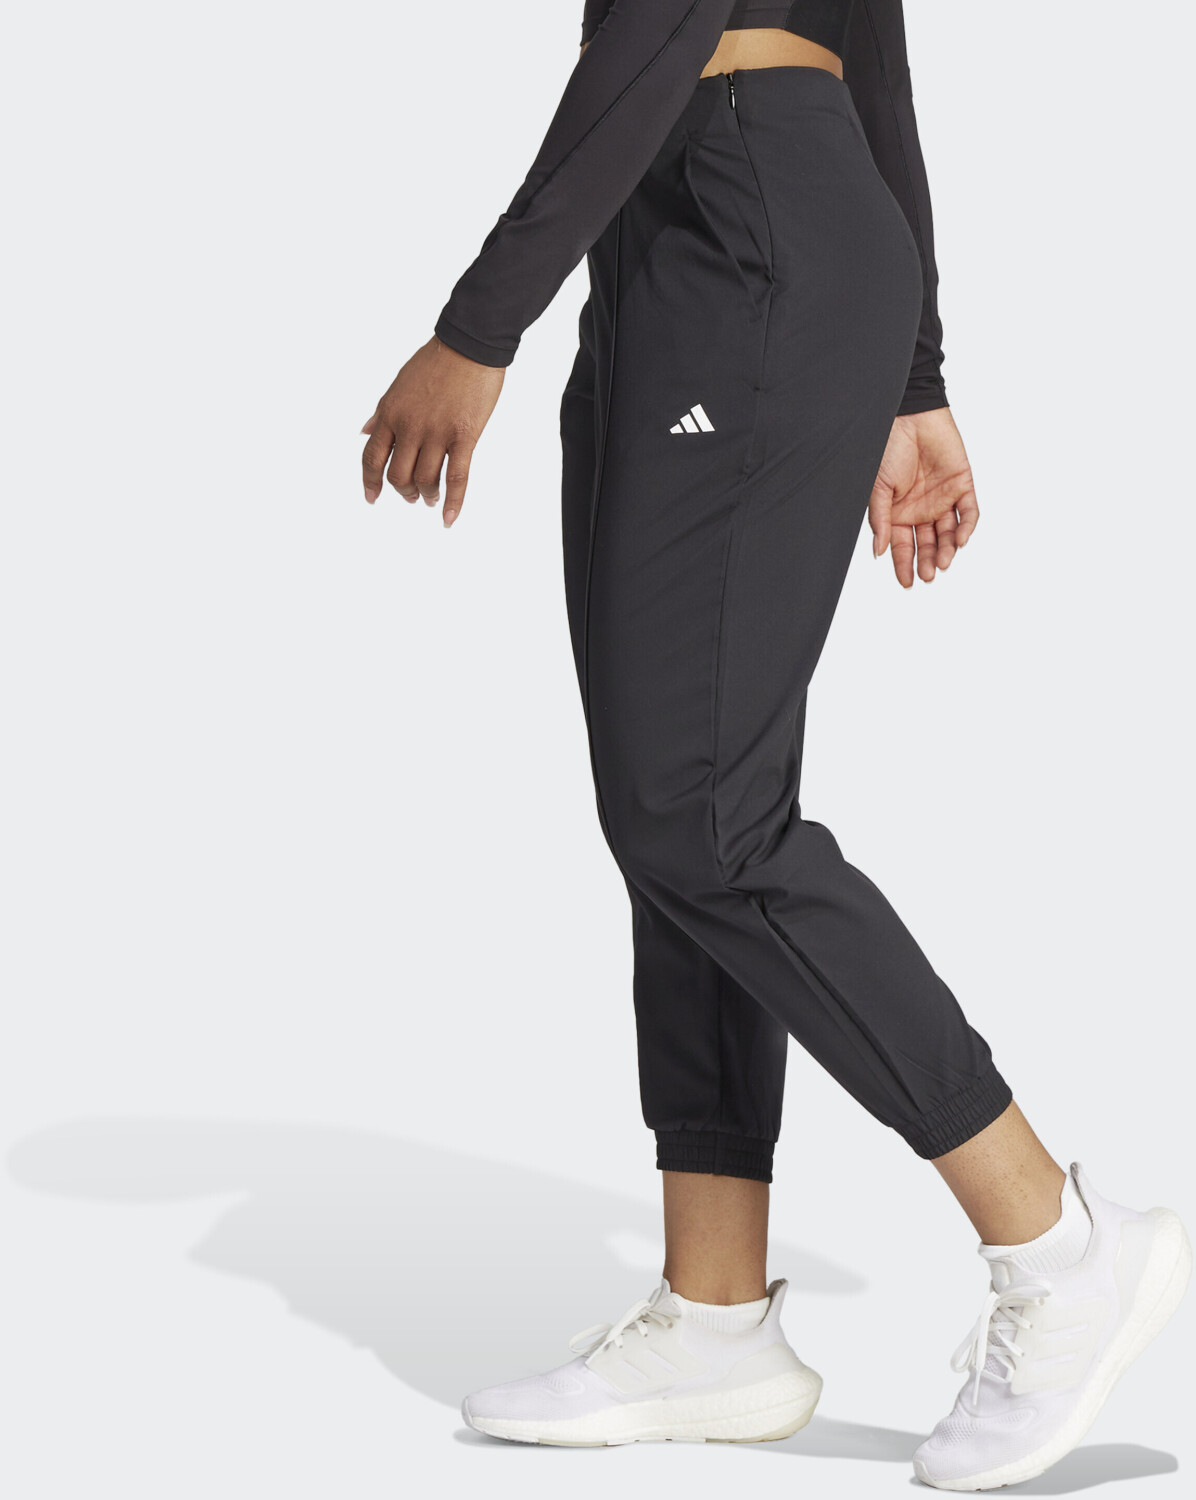 Pants Train white Woven Woman bei Adidas Branding € black/ (IJ5923) Essentials | 32,99 Minimal AEROREADY ab Preisvergleich